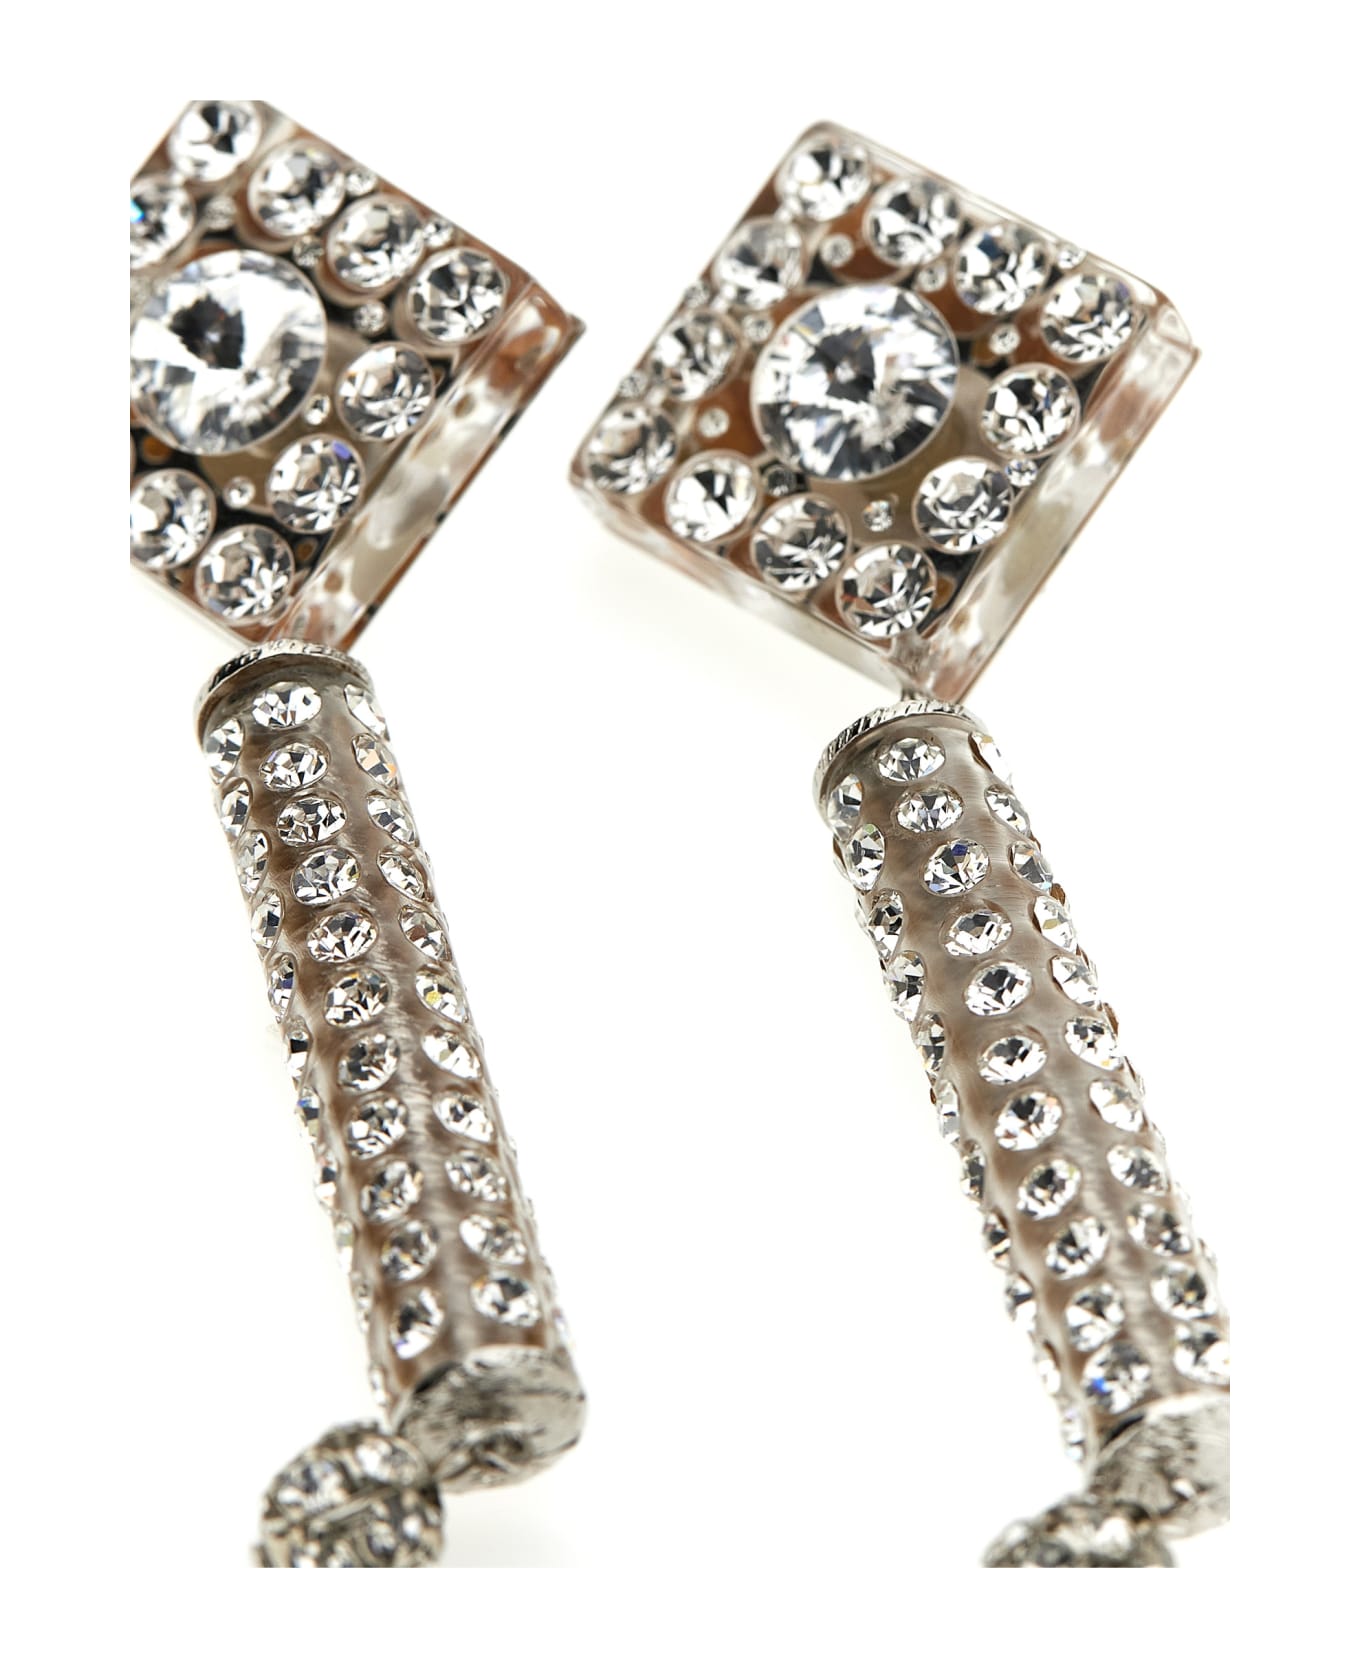 Alessandra Rich Crystal Earrings - Silver